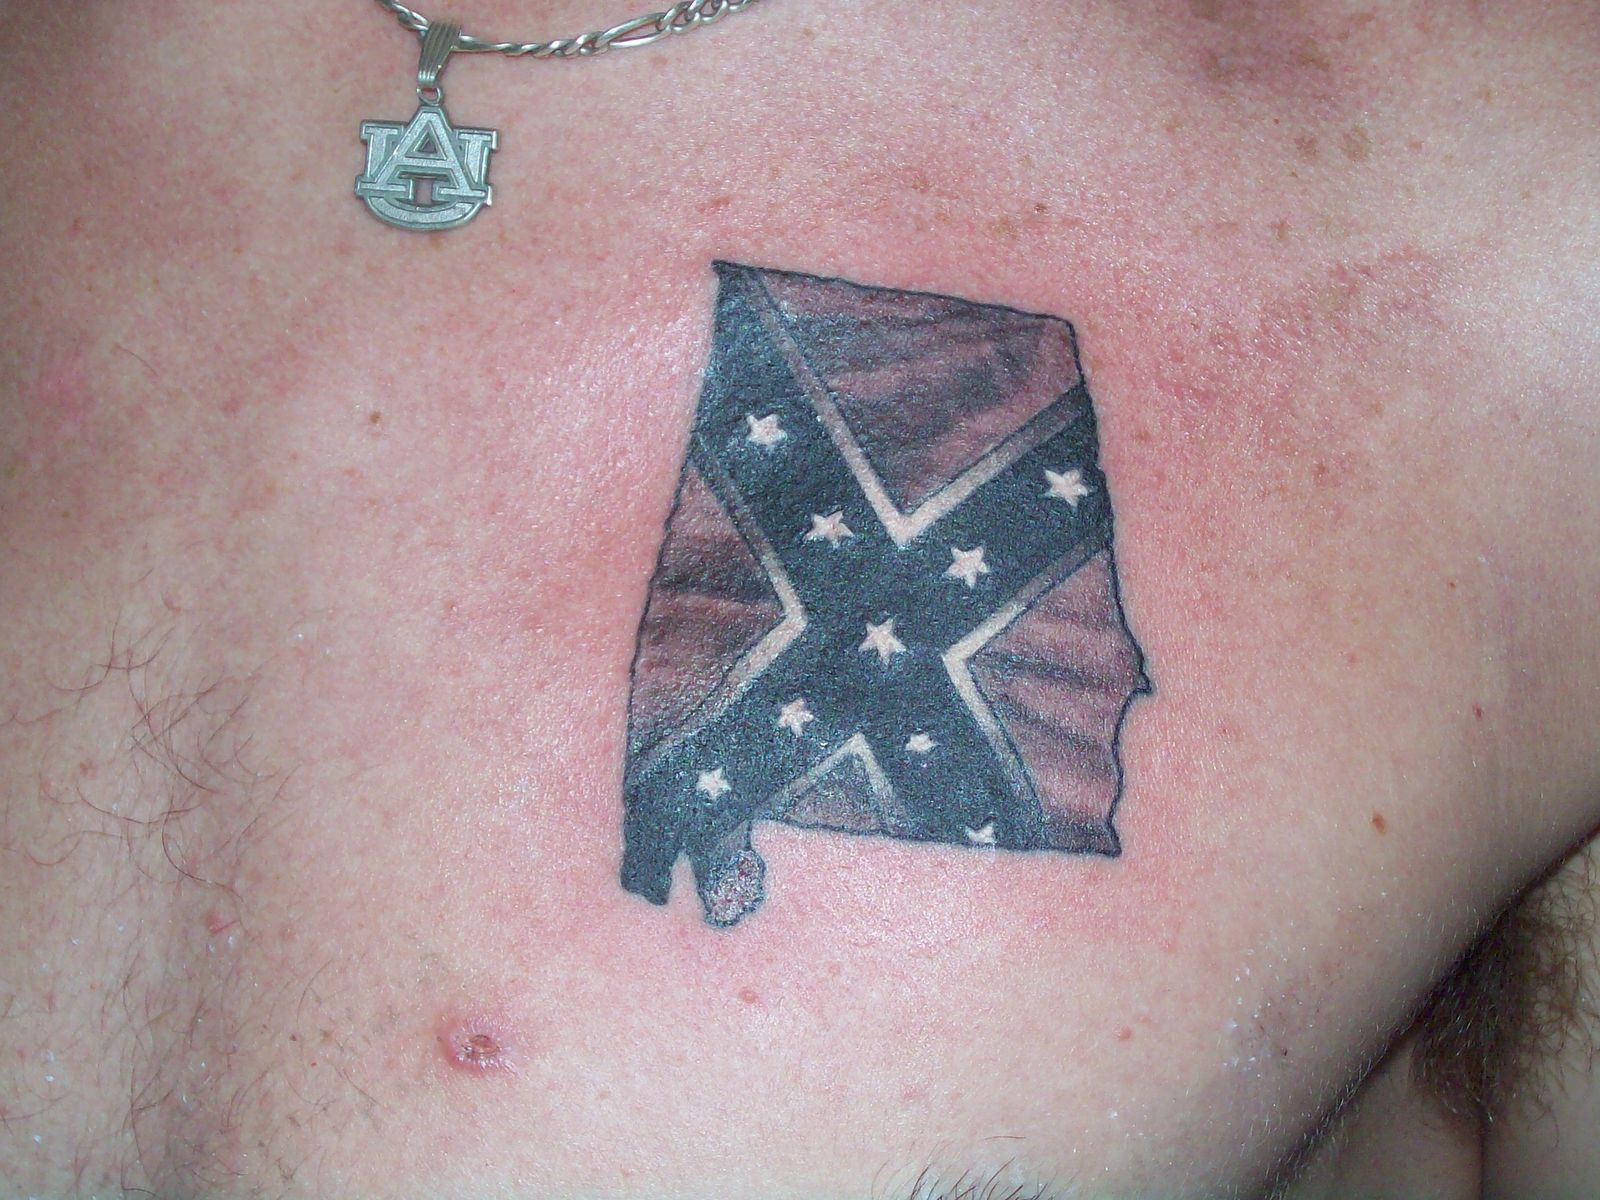 Rebel Flag (Alabama) Tattoo Design.